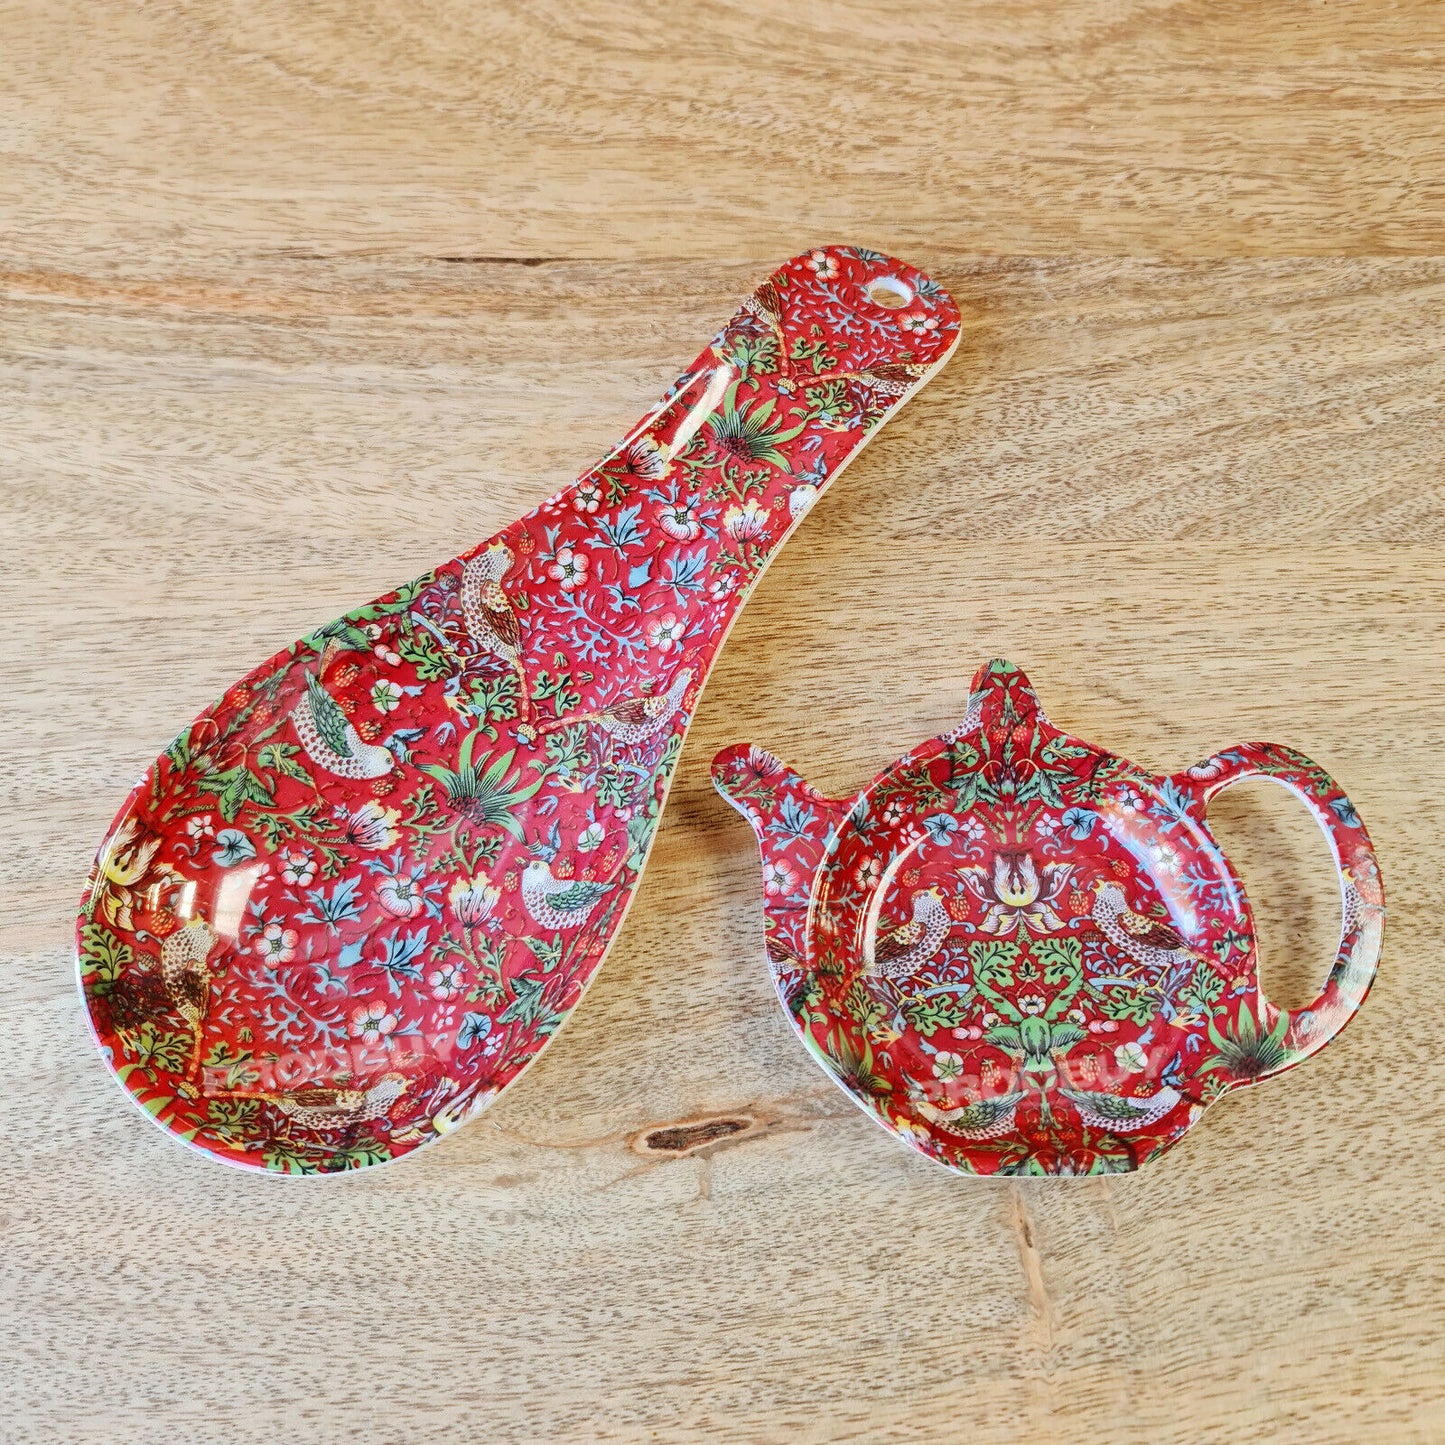 2 Piece William Morris Strawberry Thief Red Vintage Floral Melamine Tea Bag Tidy Spoon Rest Set